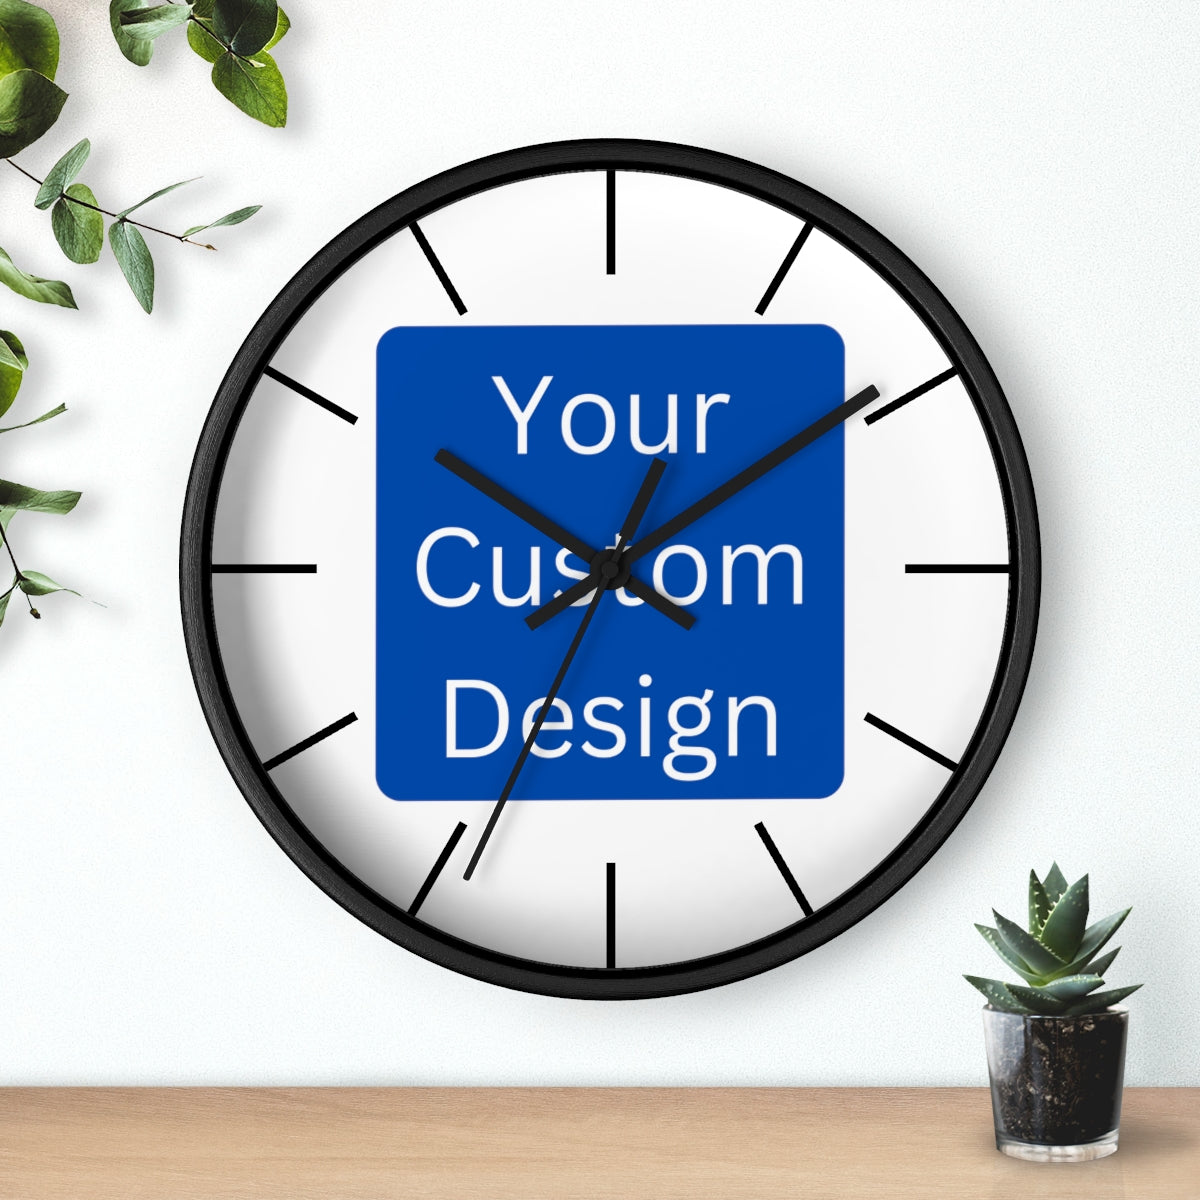 Customizable Wall clock